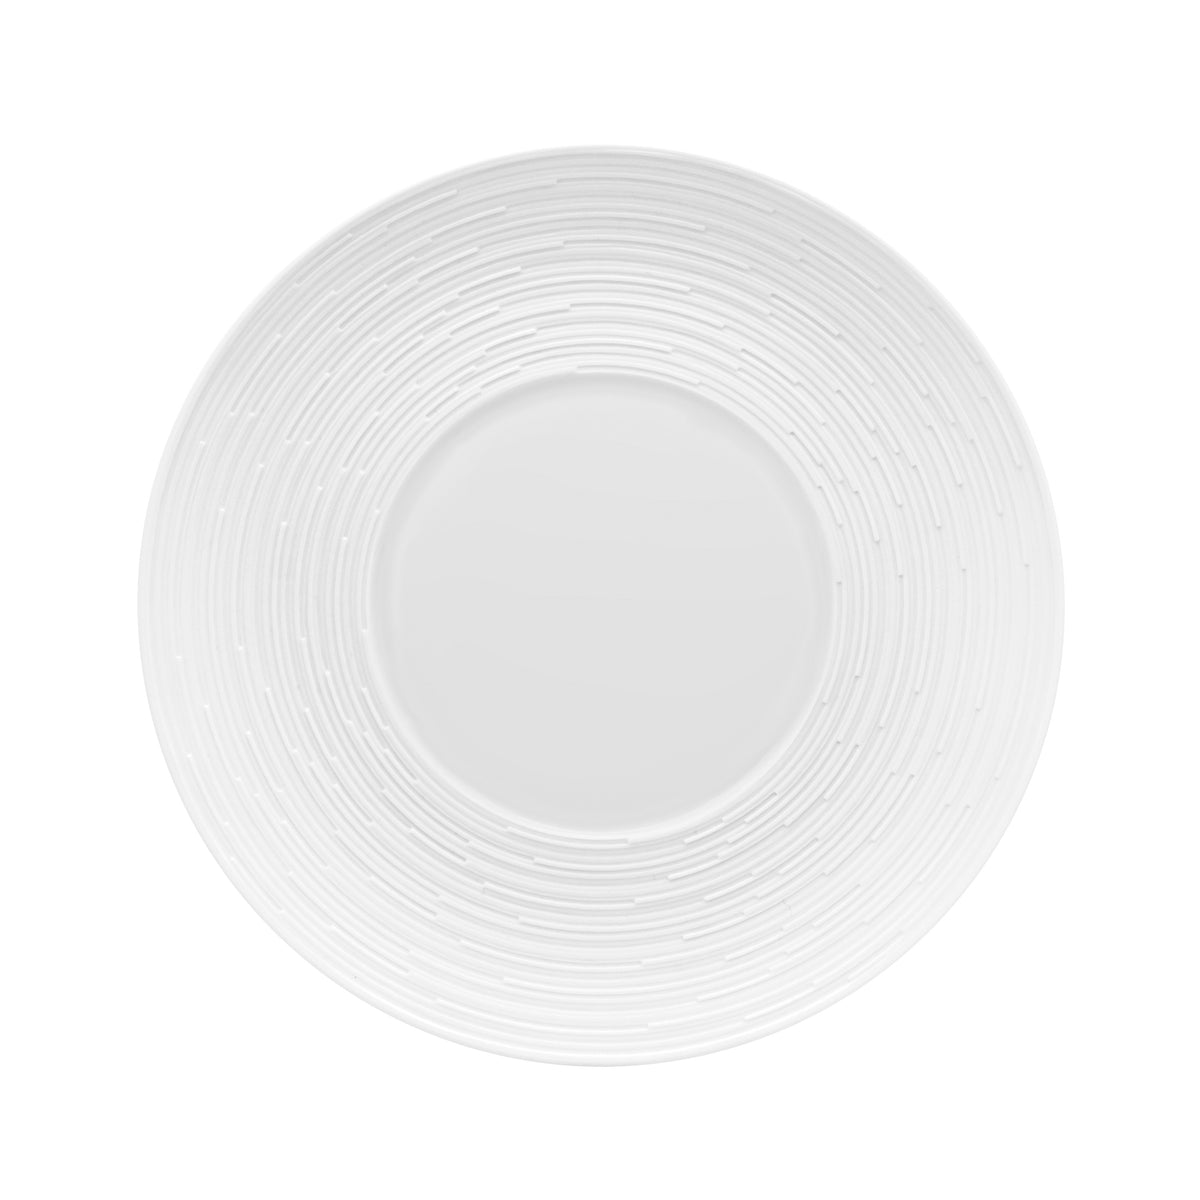 LABYRINTHE - Assiette plate